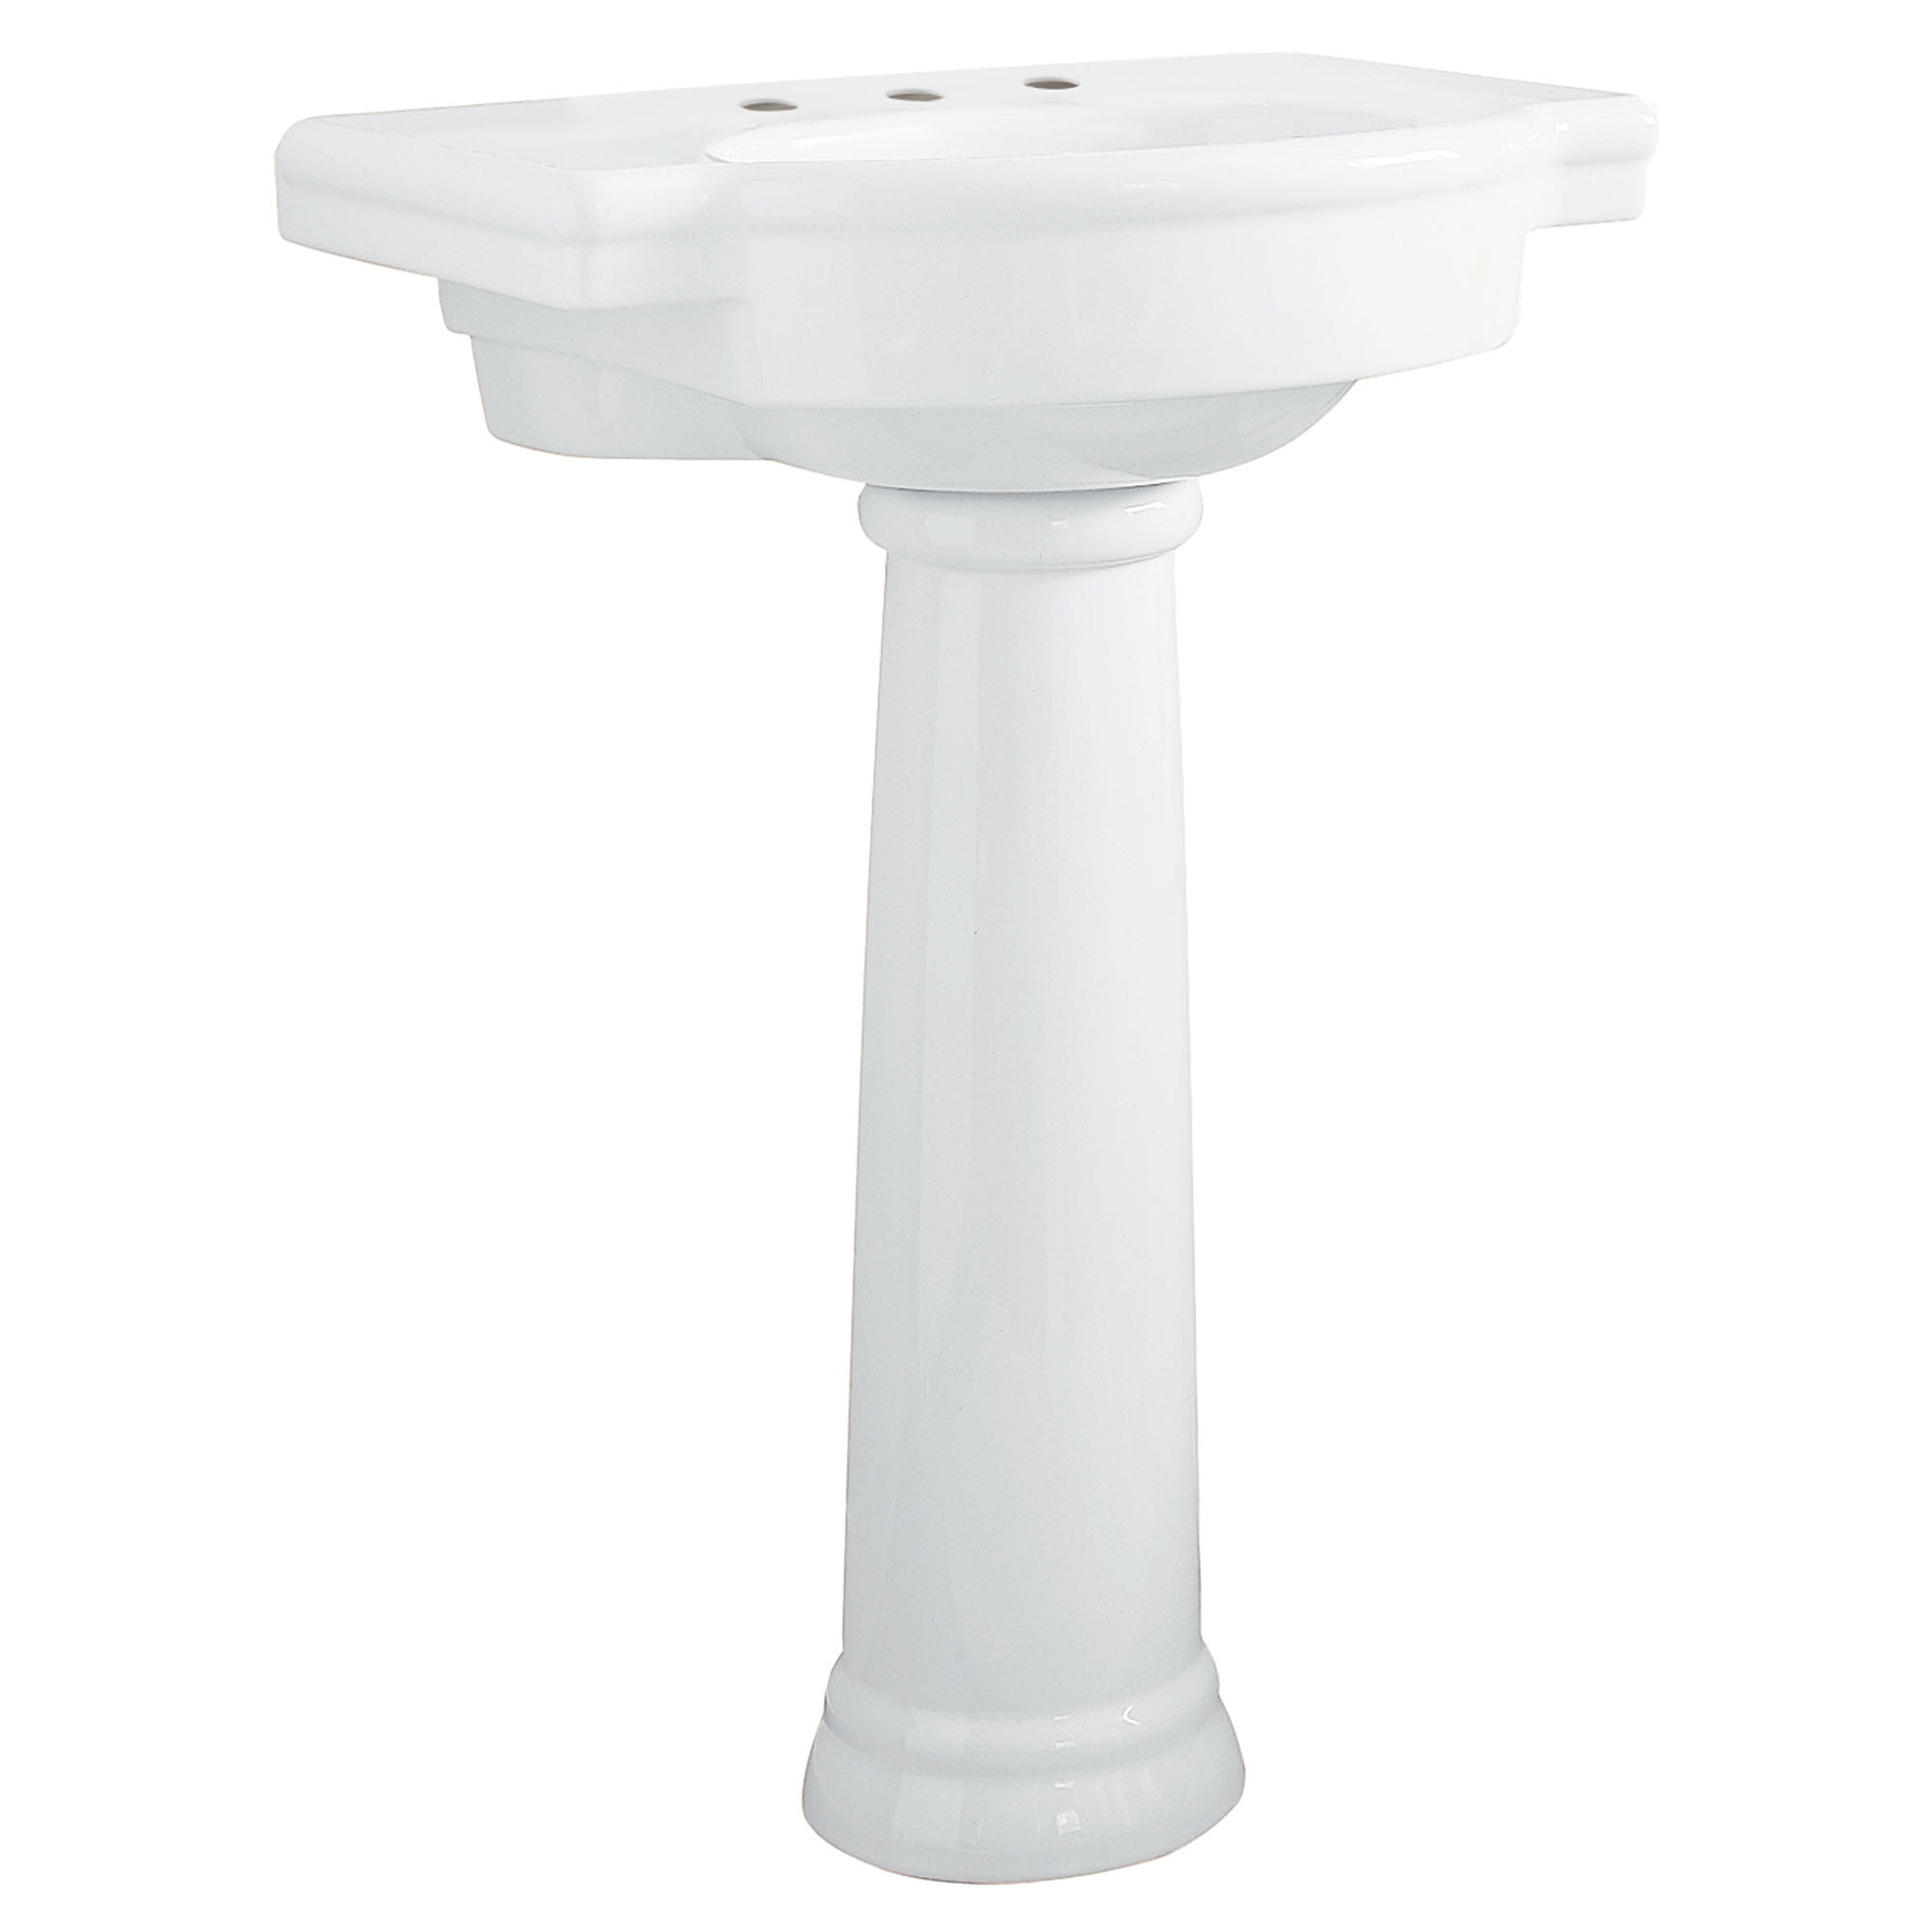 Retrospect® 8-Inch Widespread Pedestal Sink Top and Leg Combination